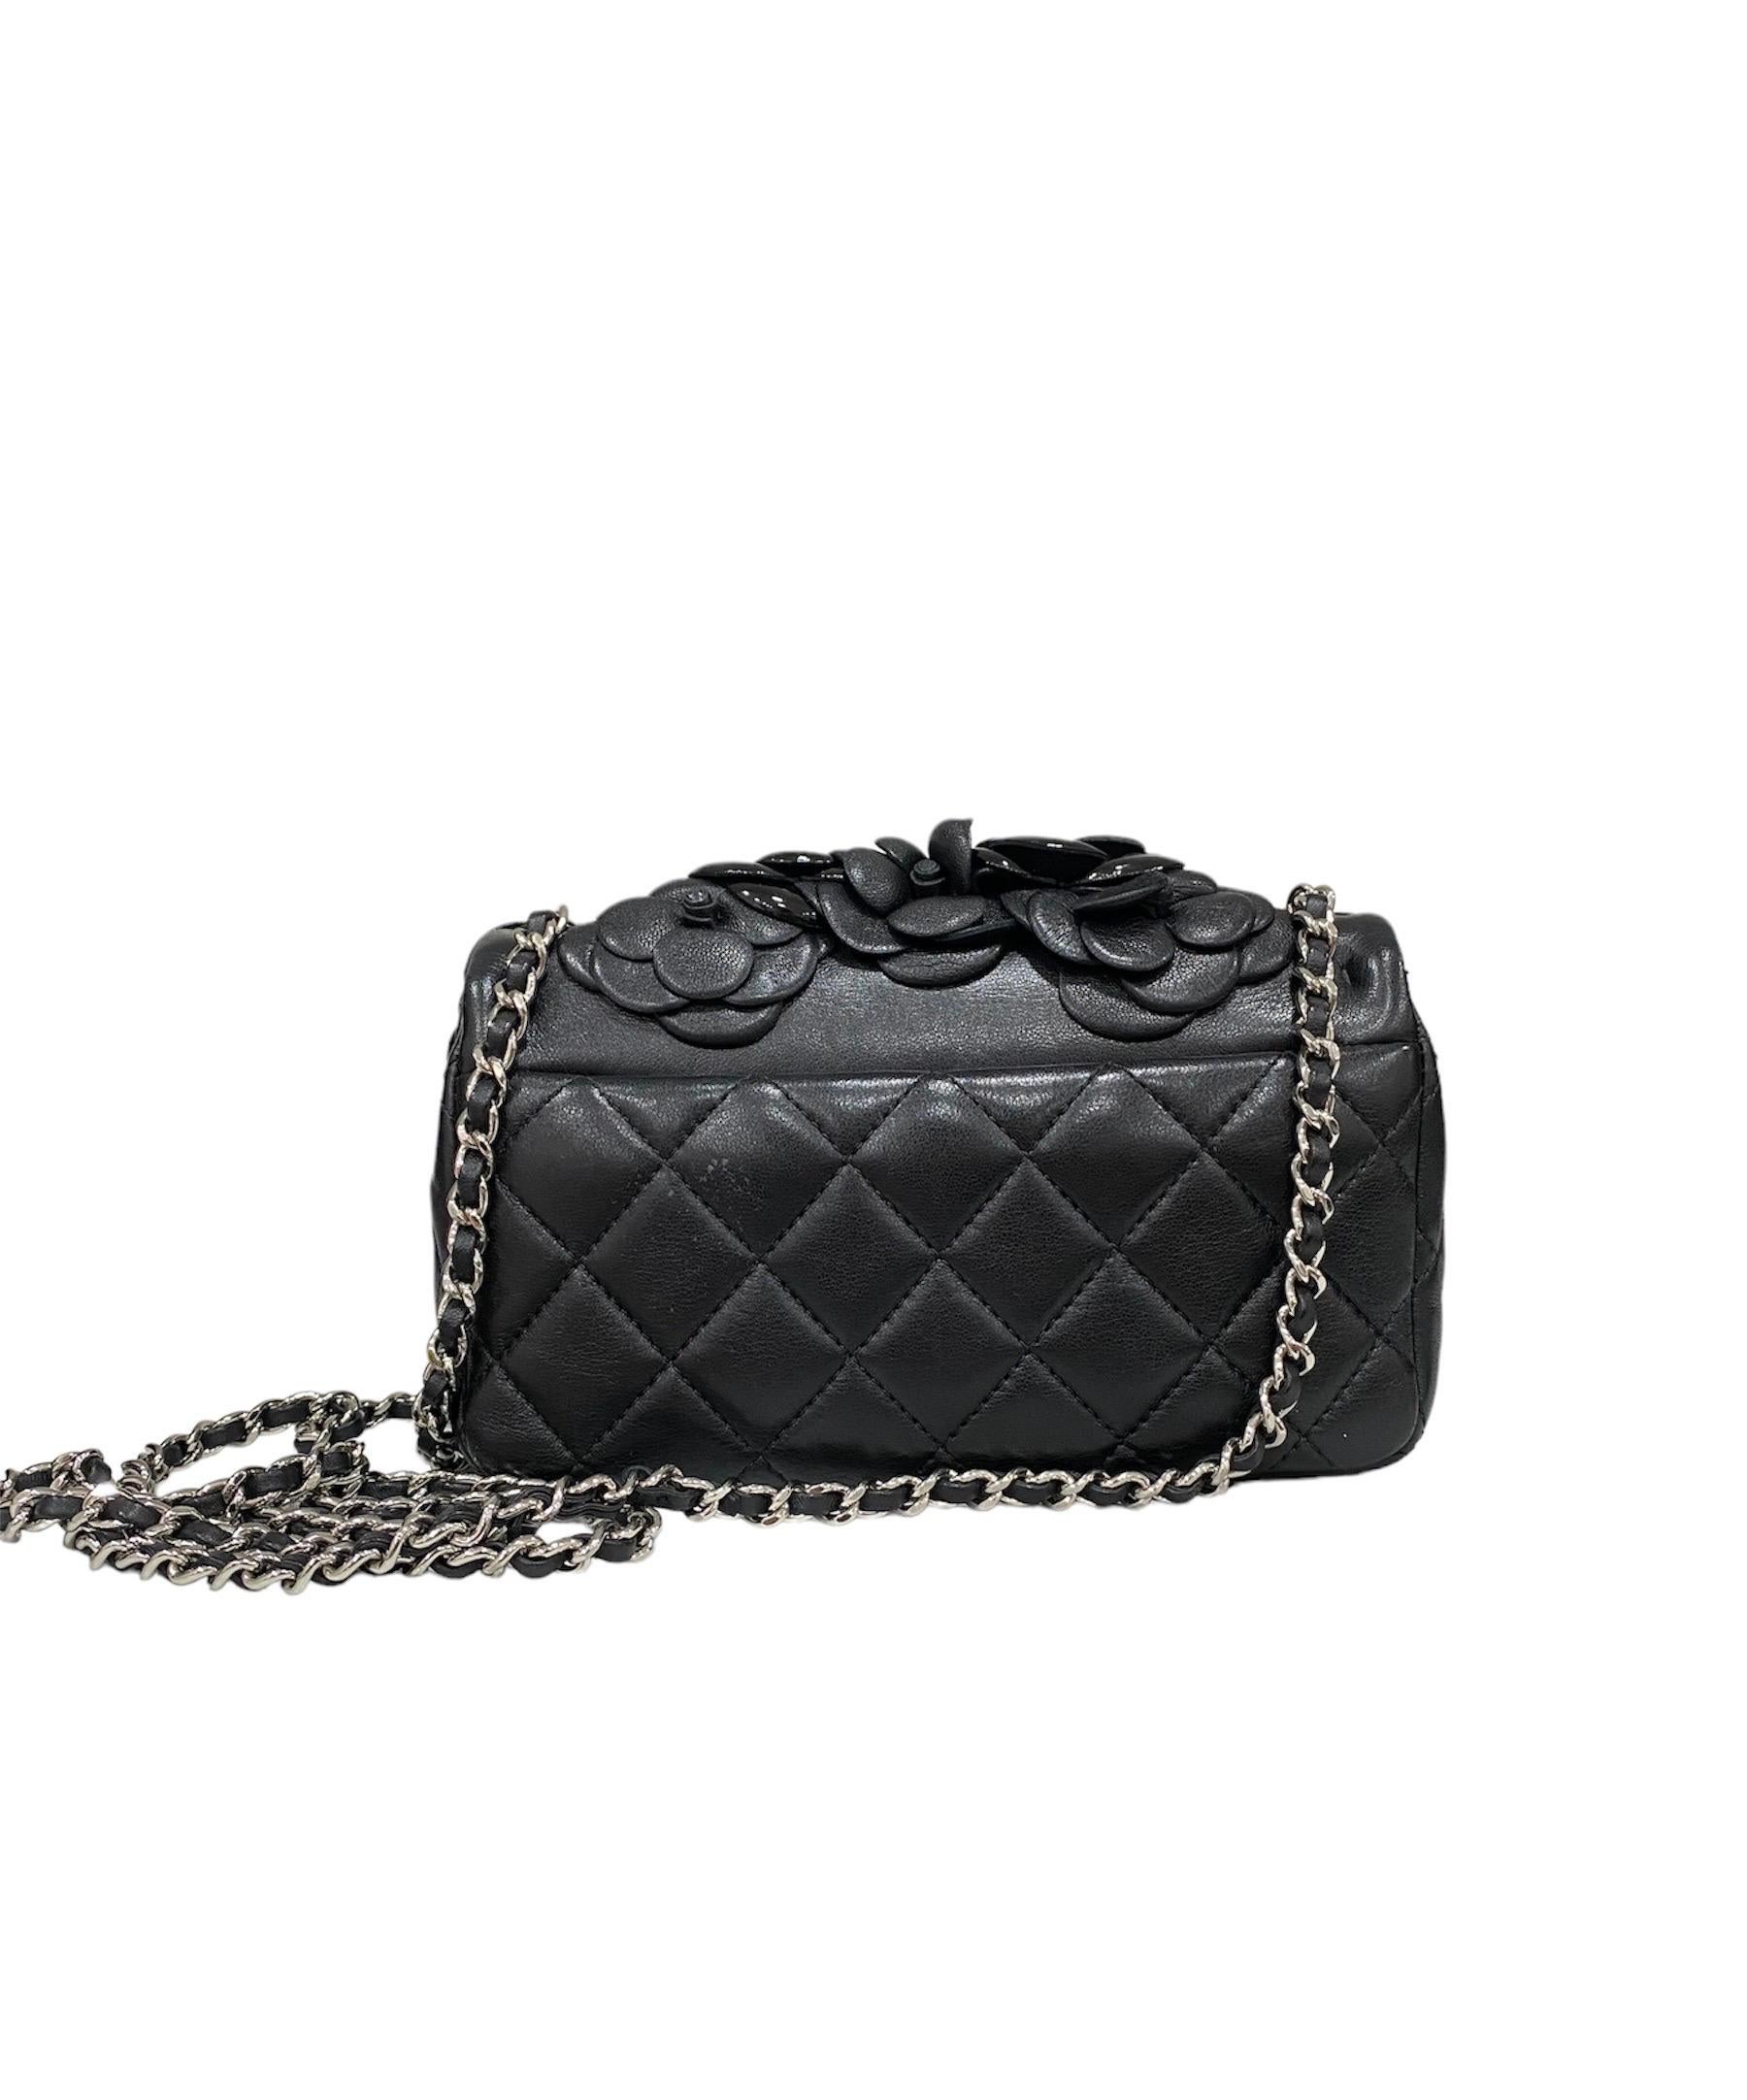 Women's 2017 Chanel Mini Camelia Black  Leather Shoulder Bag